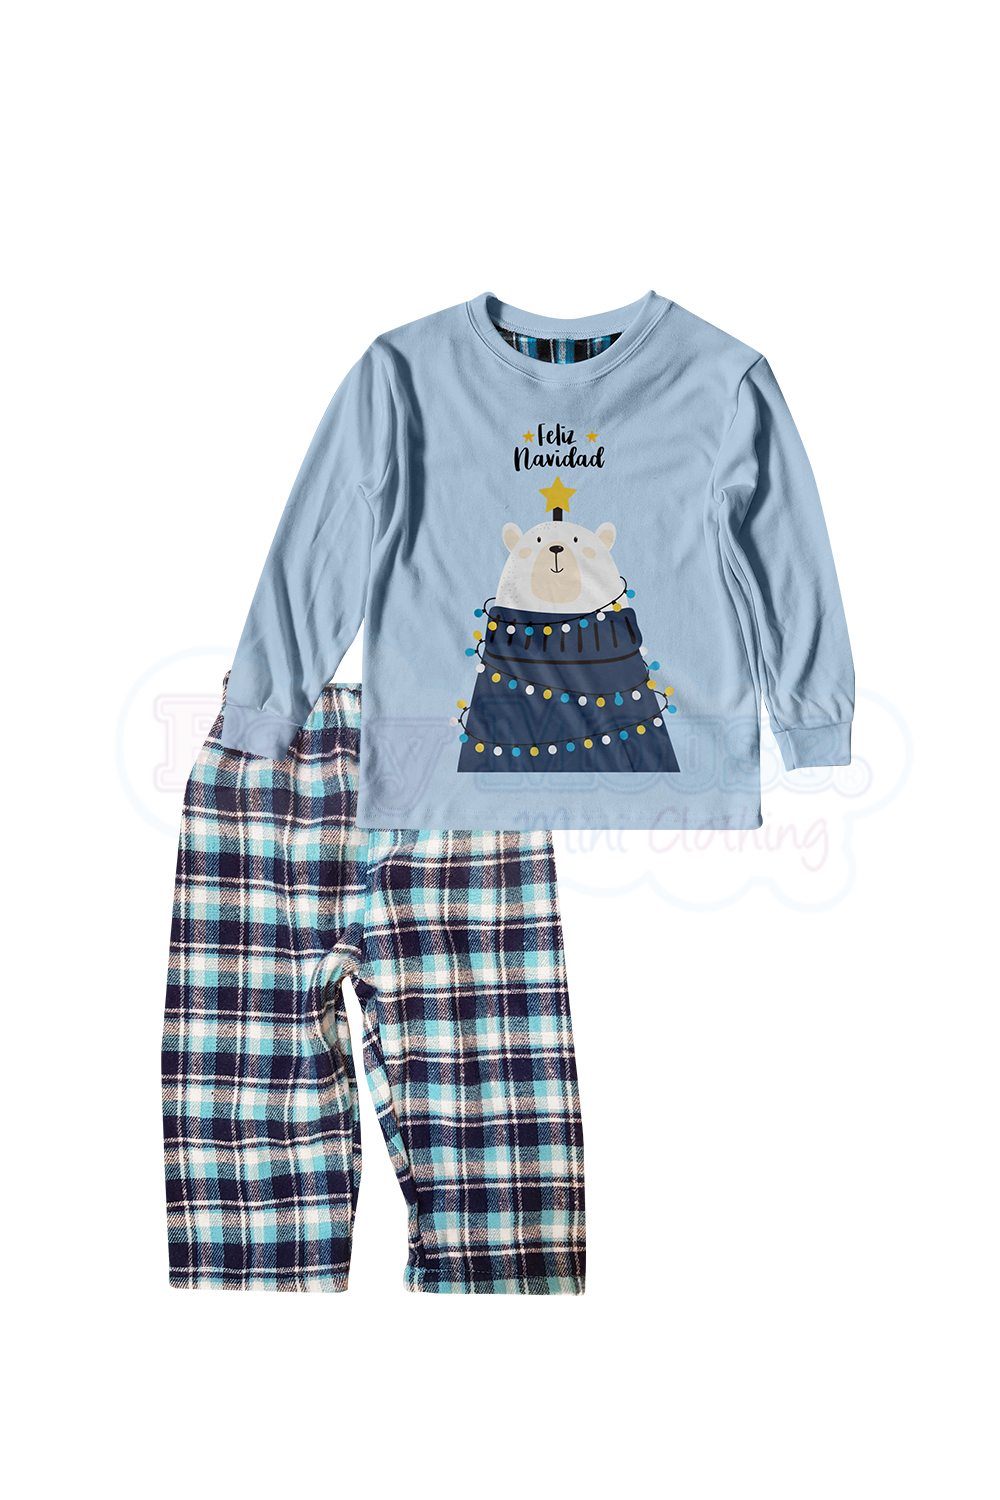 pijama oso feliz navidad